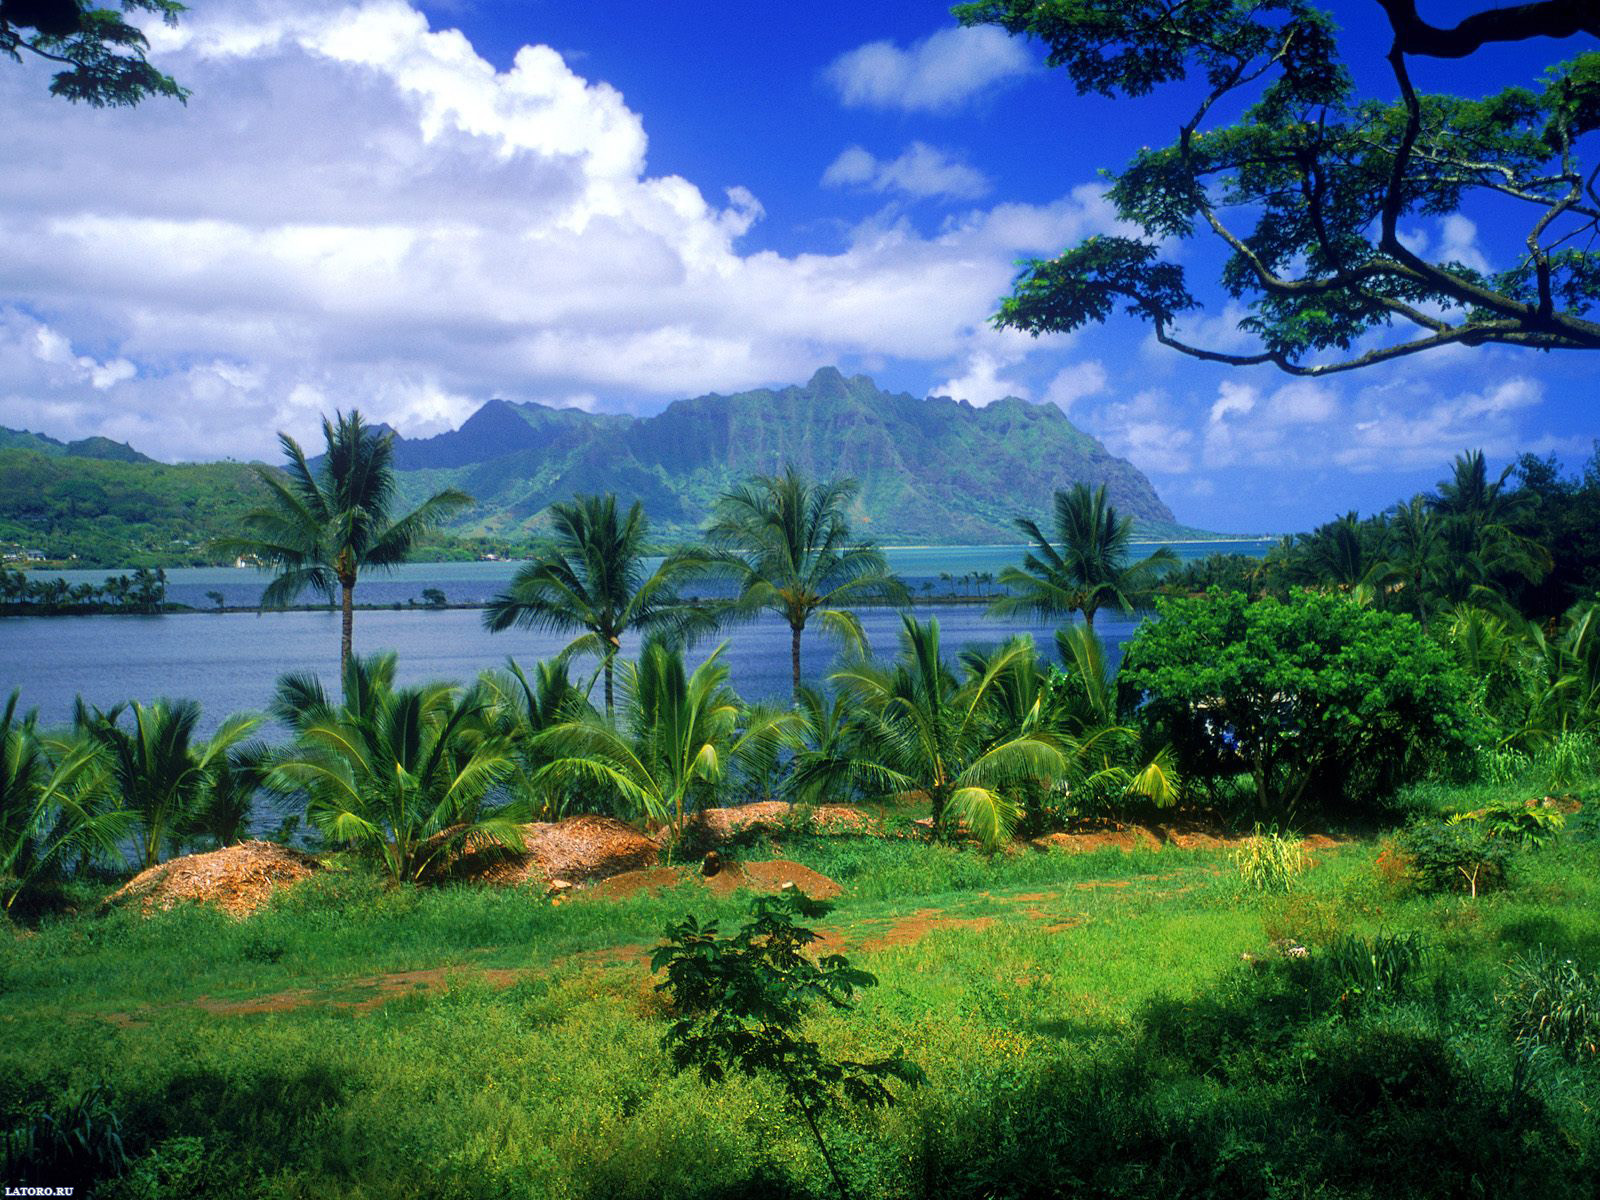 Hawaiian islands Desktop Wallpapers FREE on Latorocom